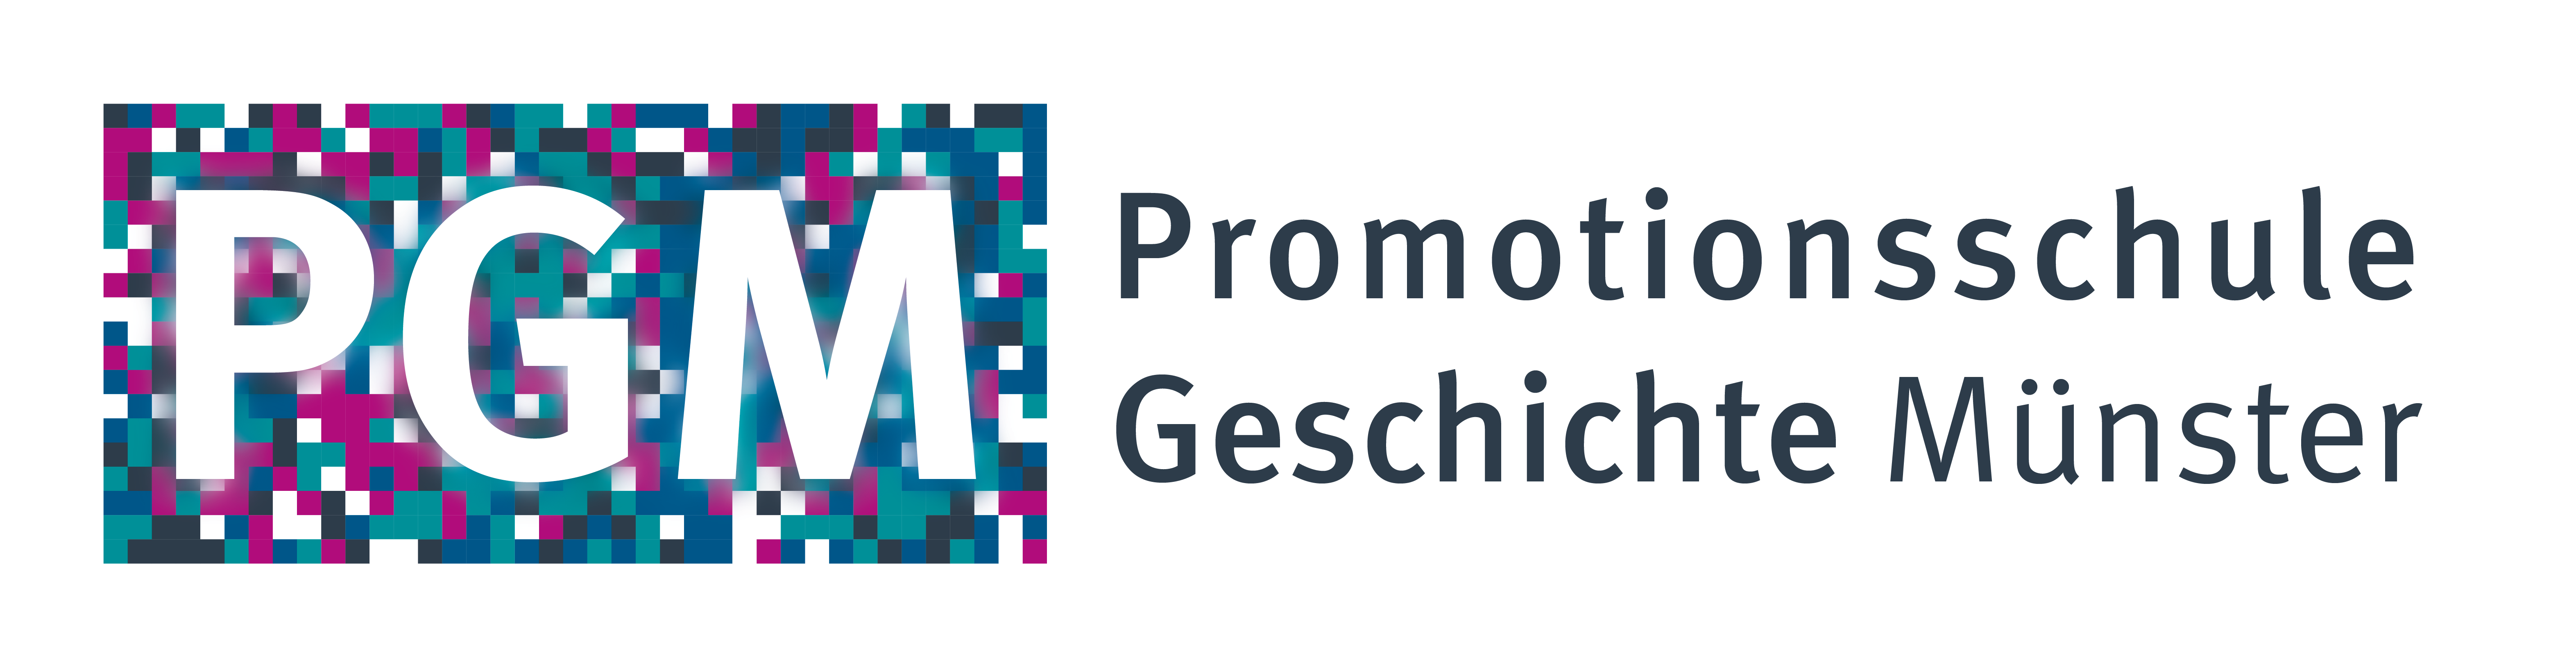 Promotionsschule Geschichte Münster